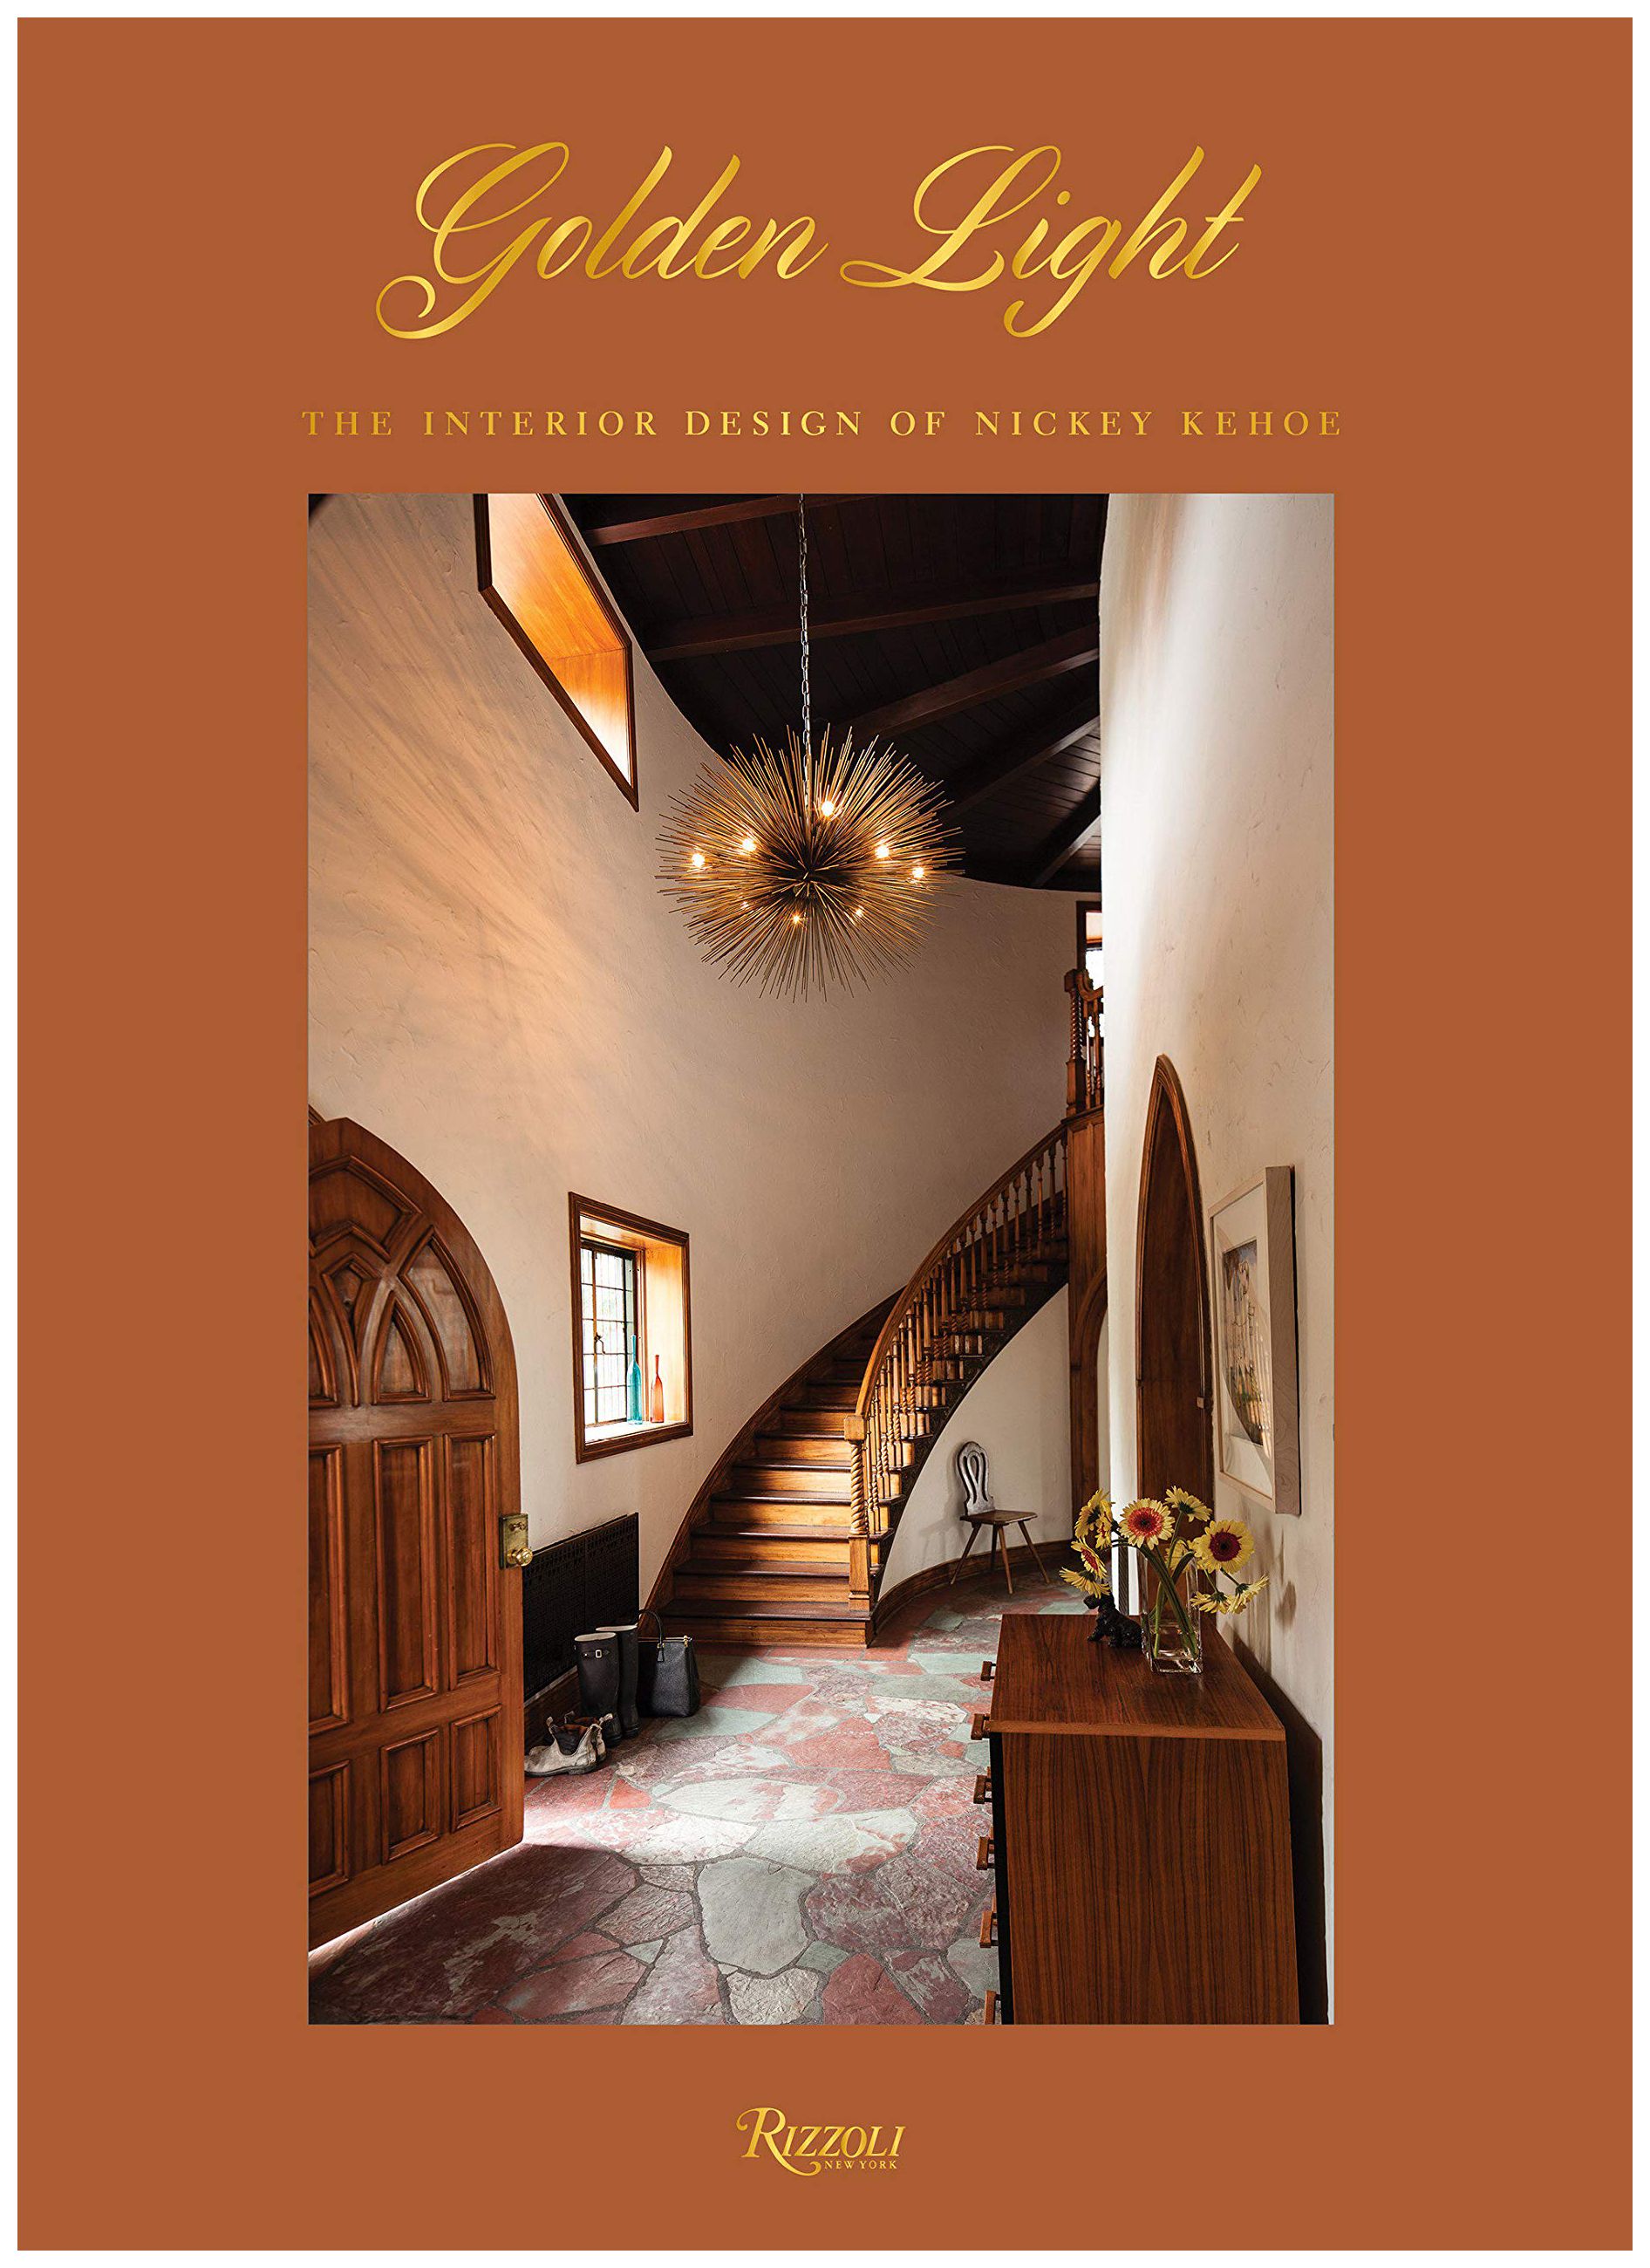  - Golden Light: The Interior Design of Nickey Kehoe